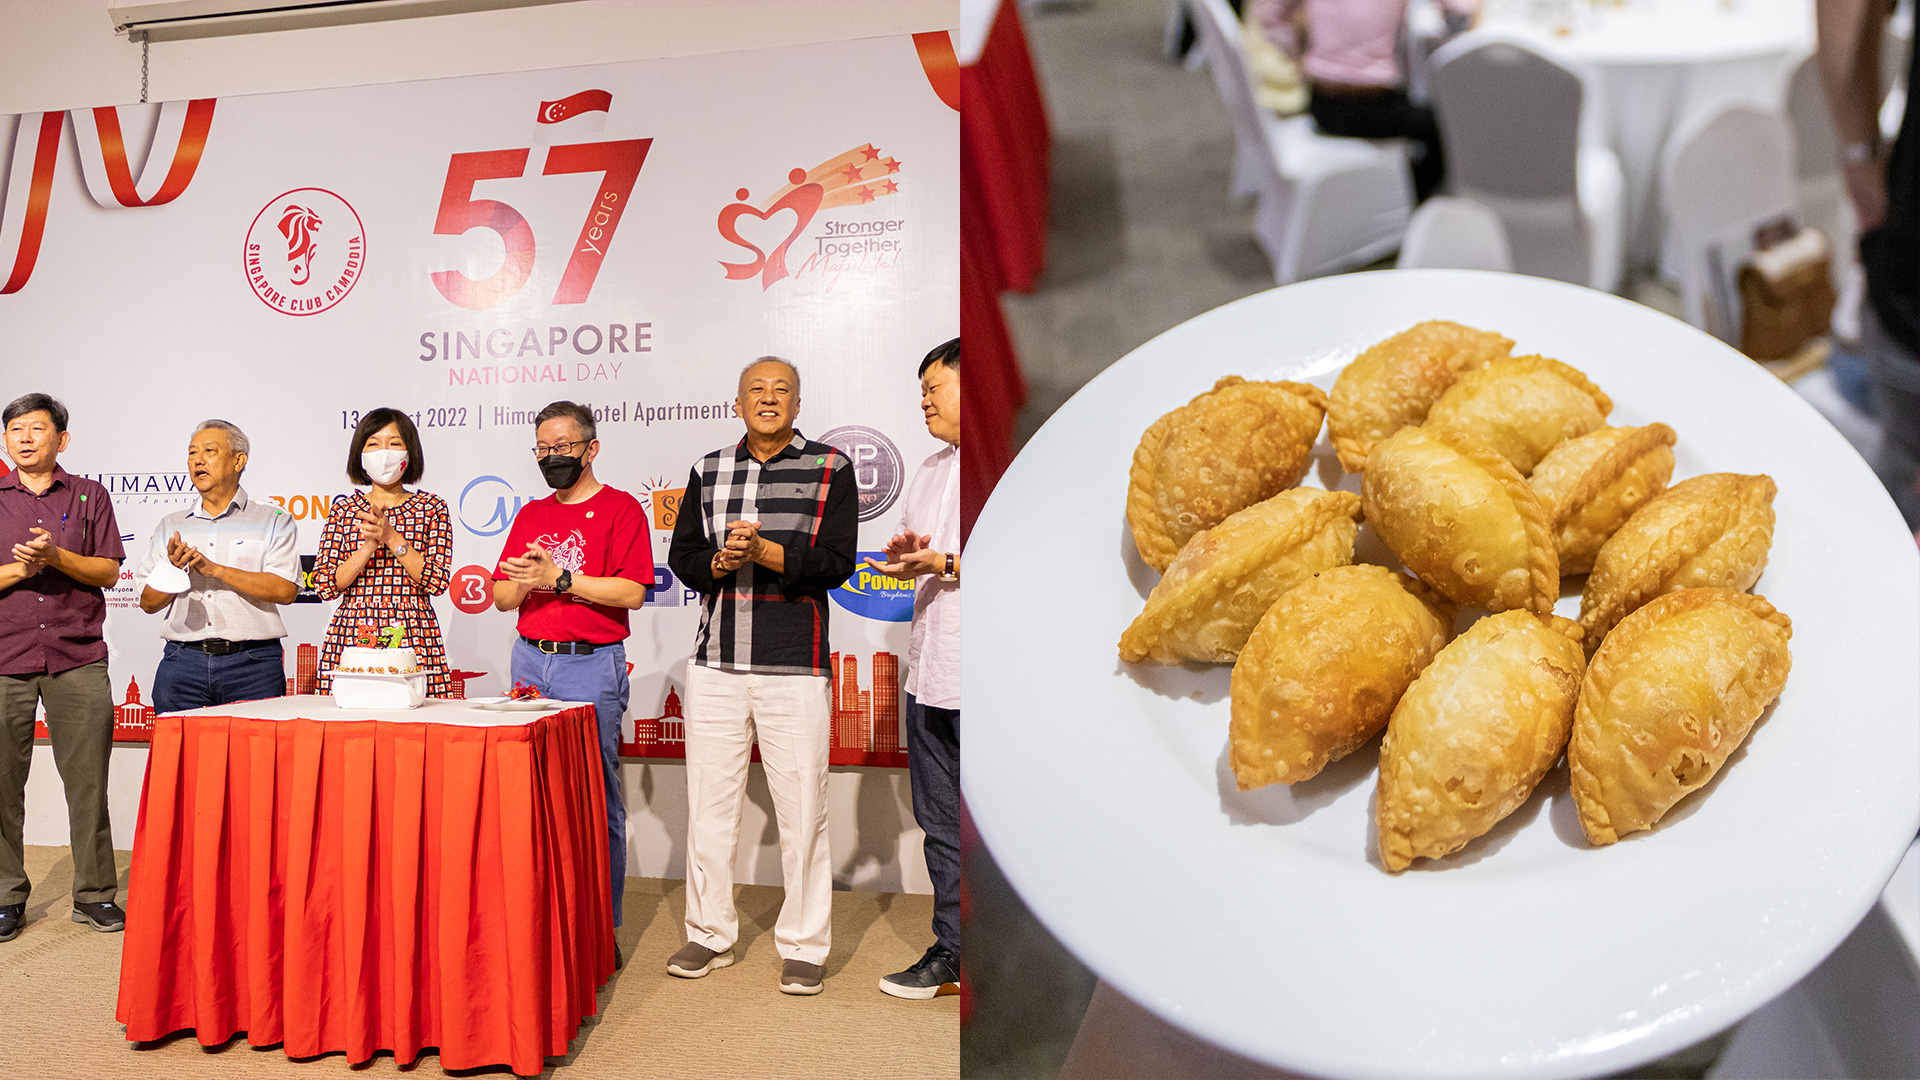 Celebrating Singapore’s 57th anniversary in Cambodia with the Singapore Club Cambodia!